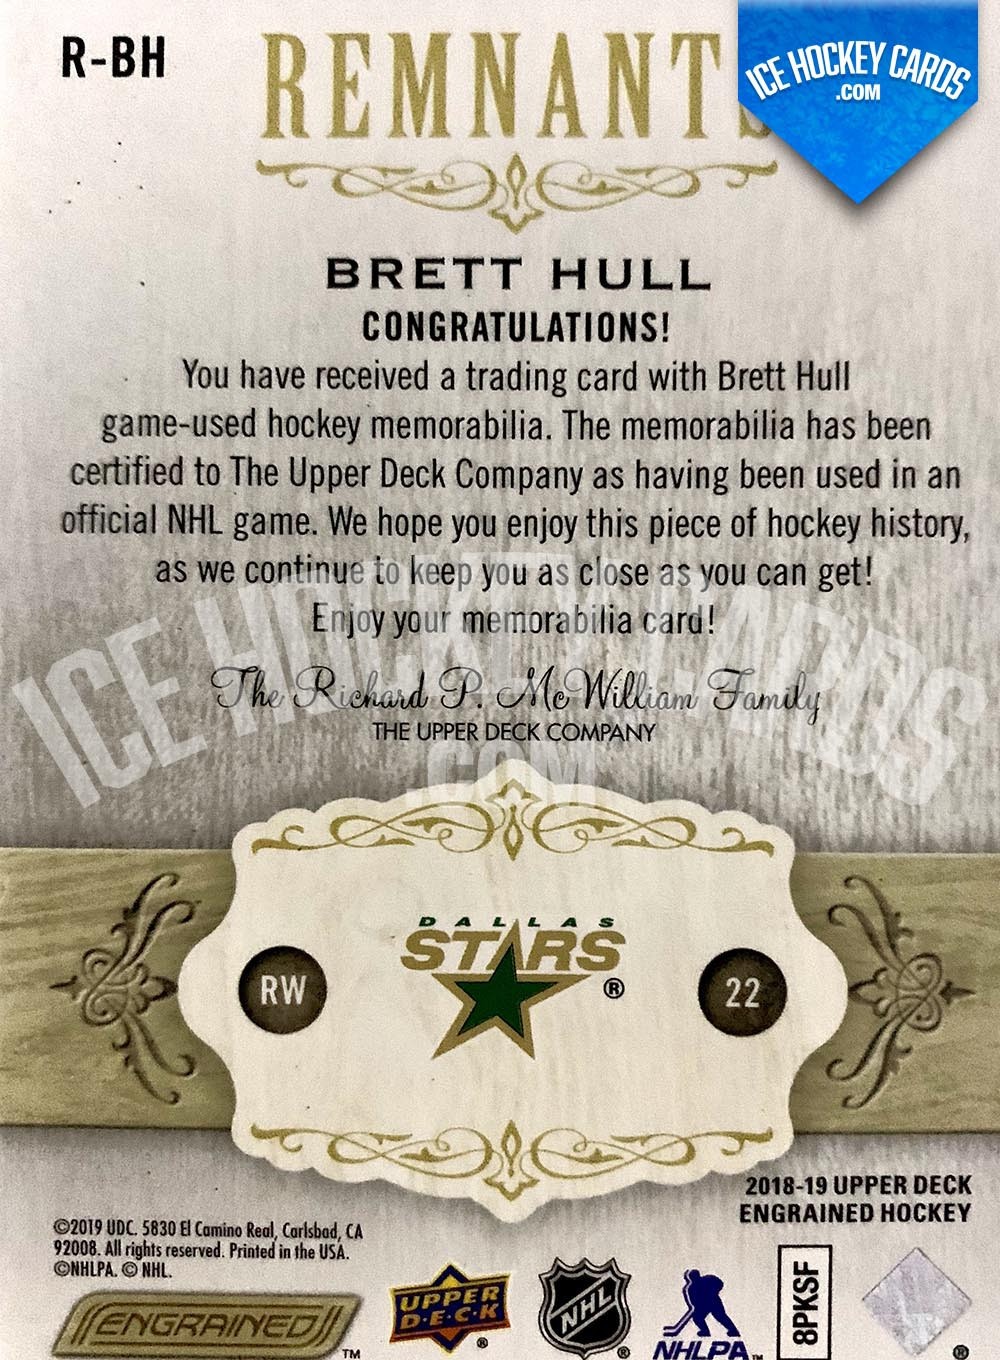 Upper Deck - Engrained 2018-19 - Brett Hull Remnants Sticks Premier Game-Used A Letter # to 100 back